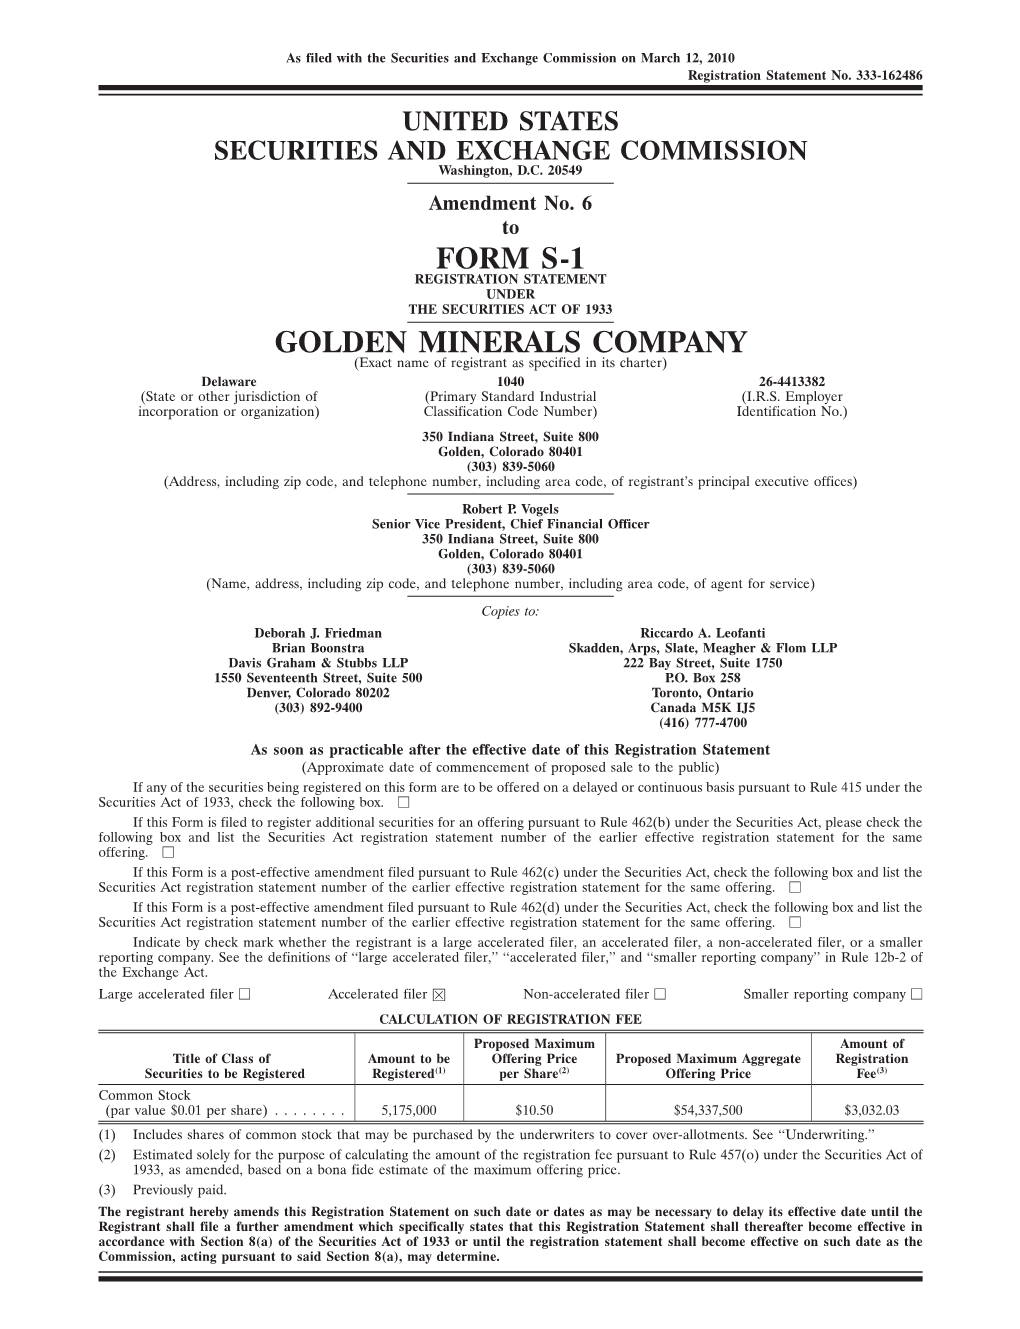 Form S-1 Golden Minerals Company